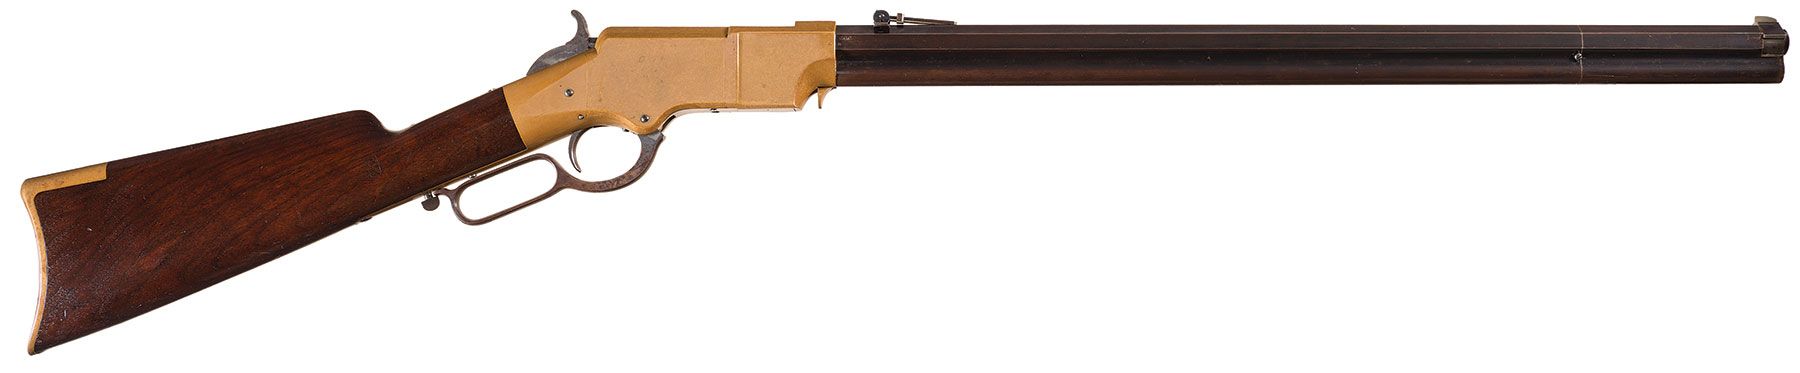 Henry rifle profile